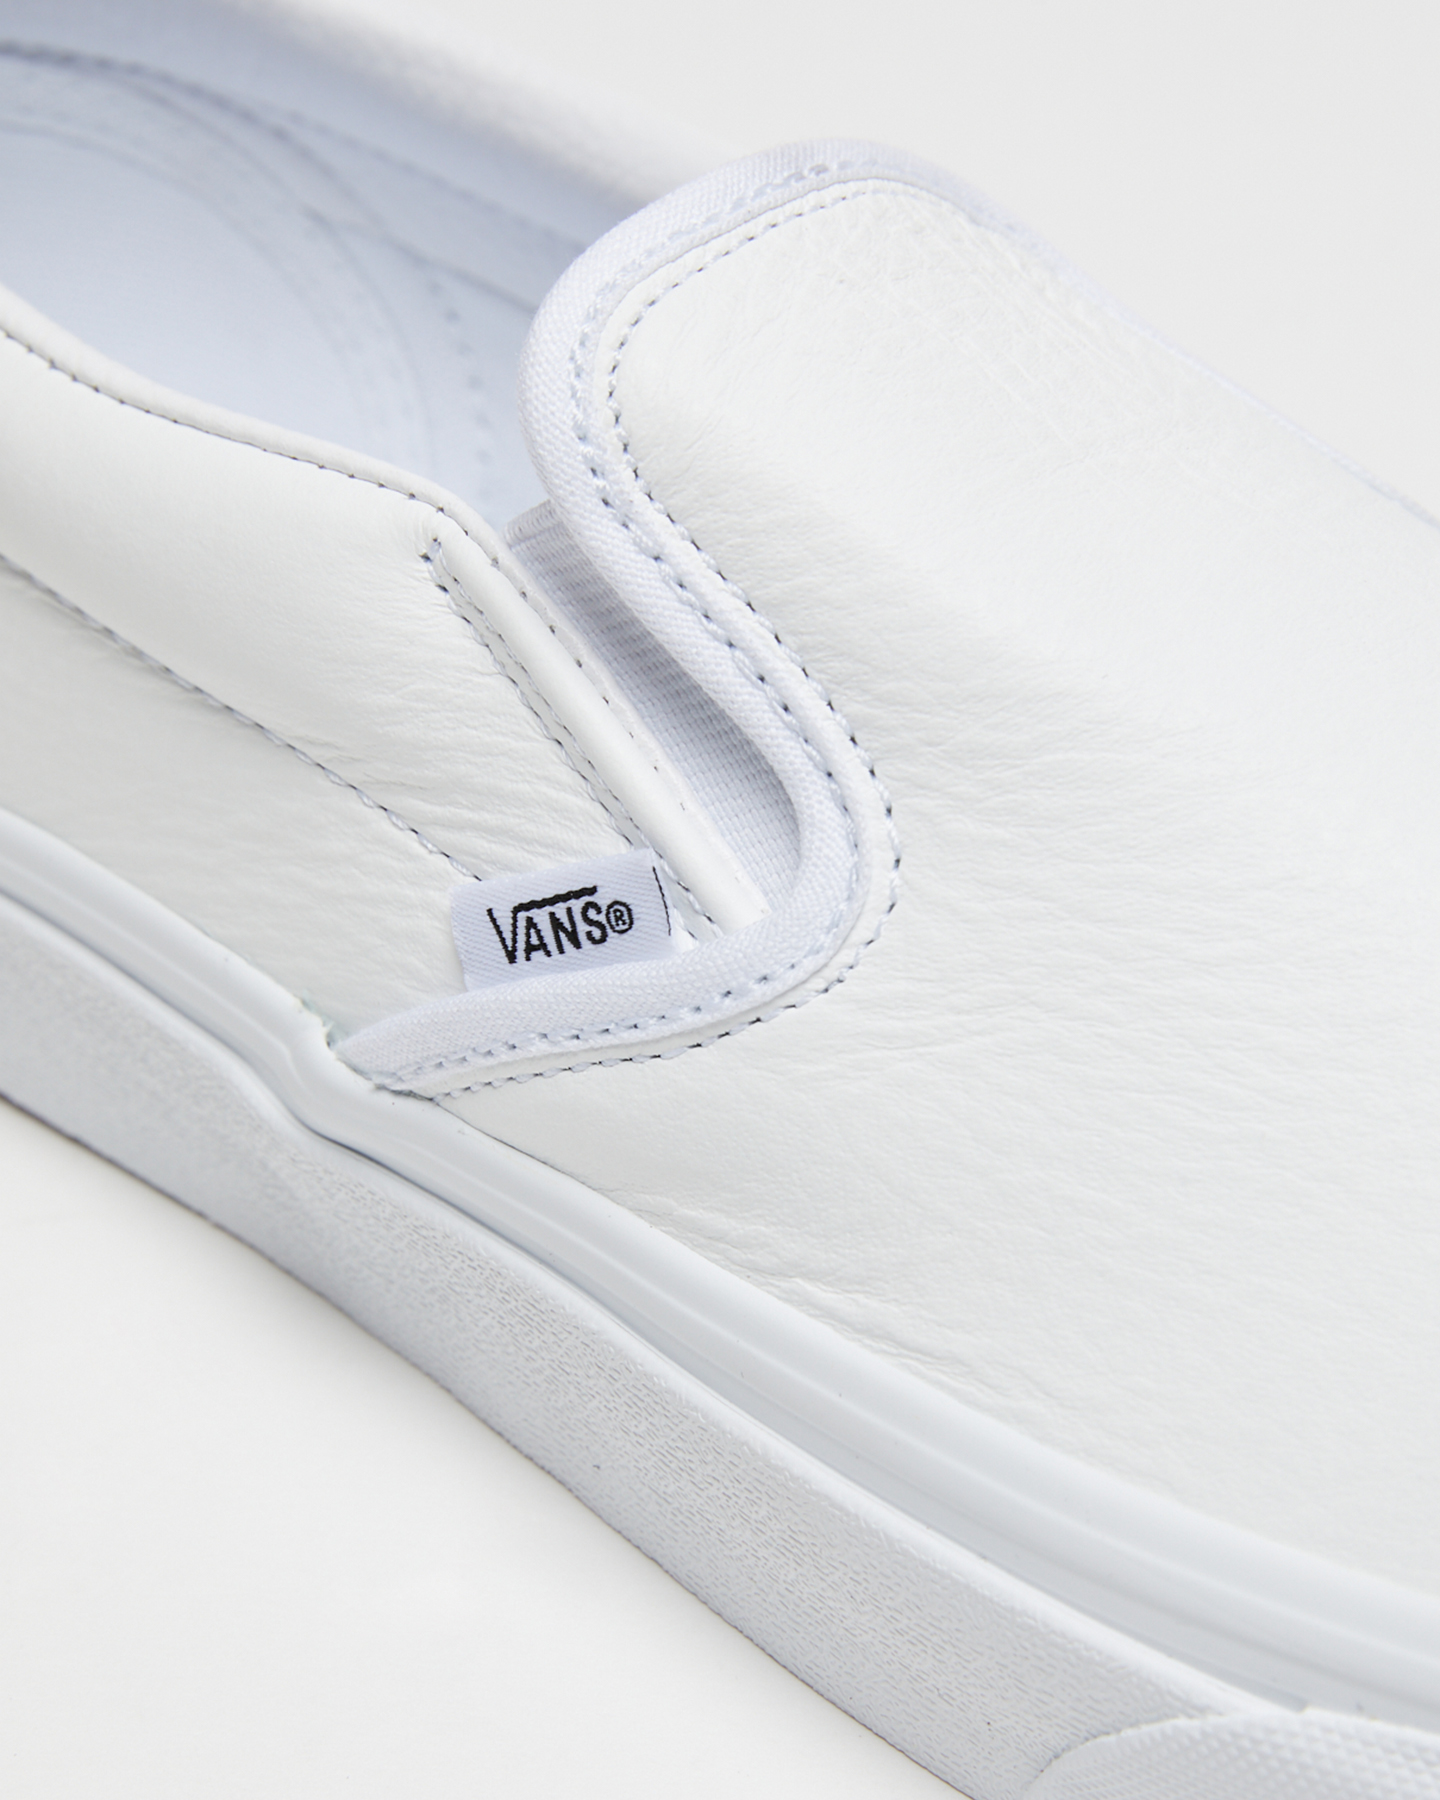 Vans Classic Slip-On Premium Leather Shoe - True White SurfStitch